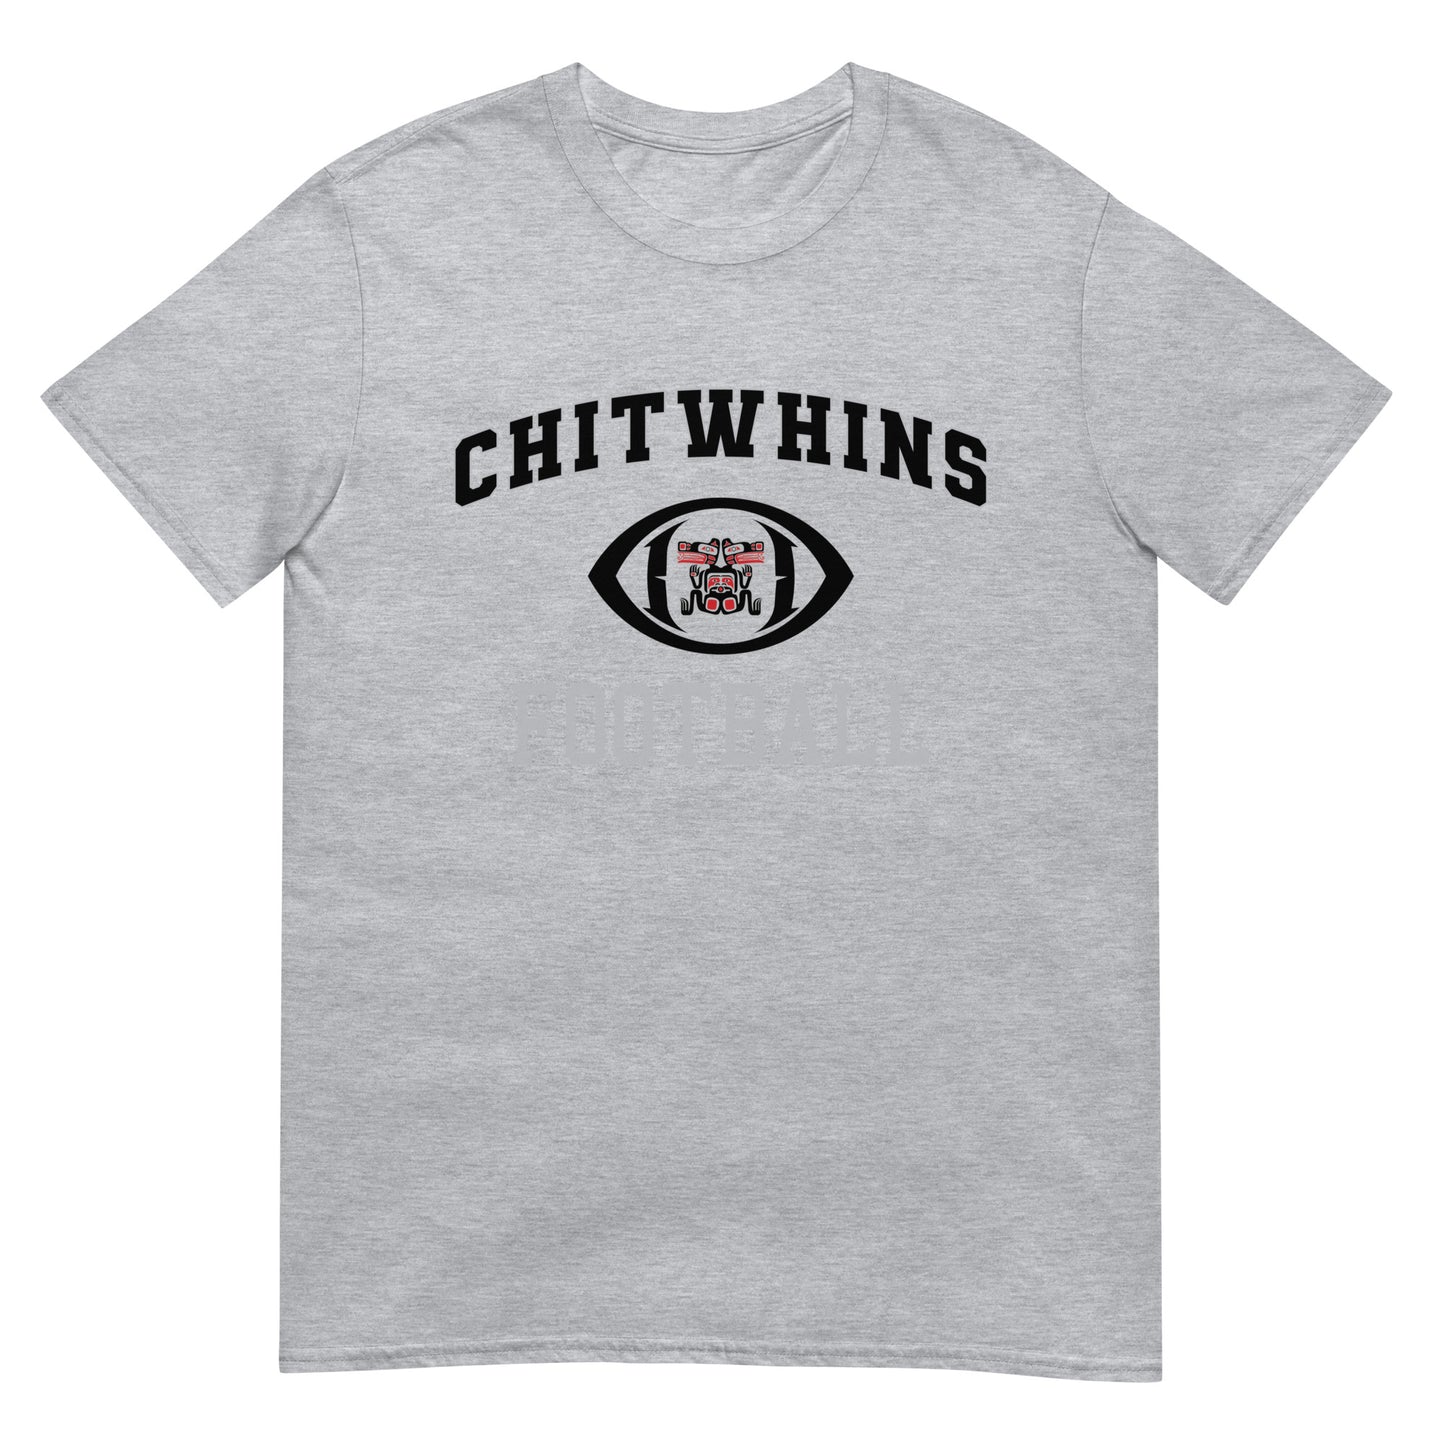 Chitwhins Football Short-Sleeve Unisex T-Shirt